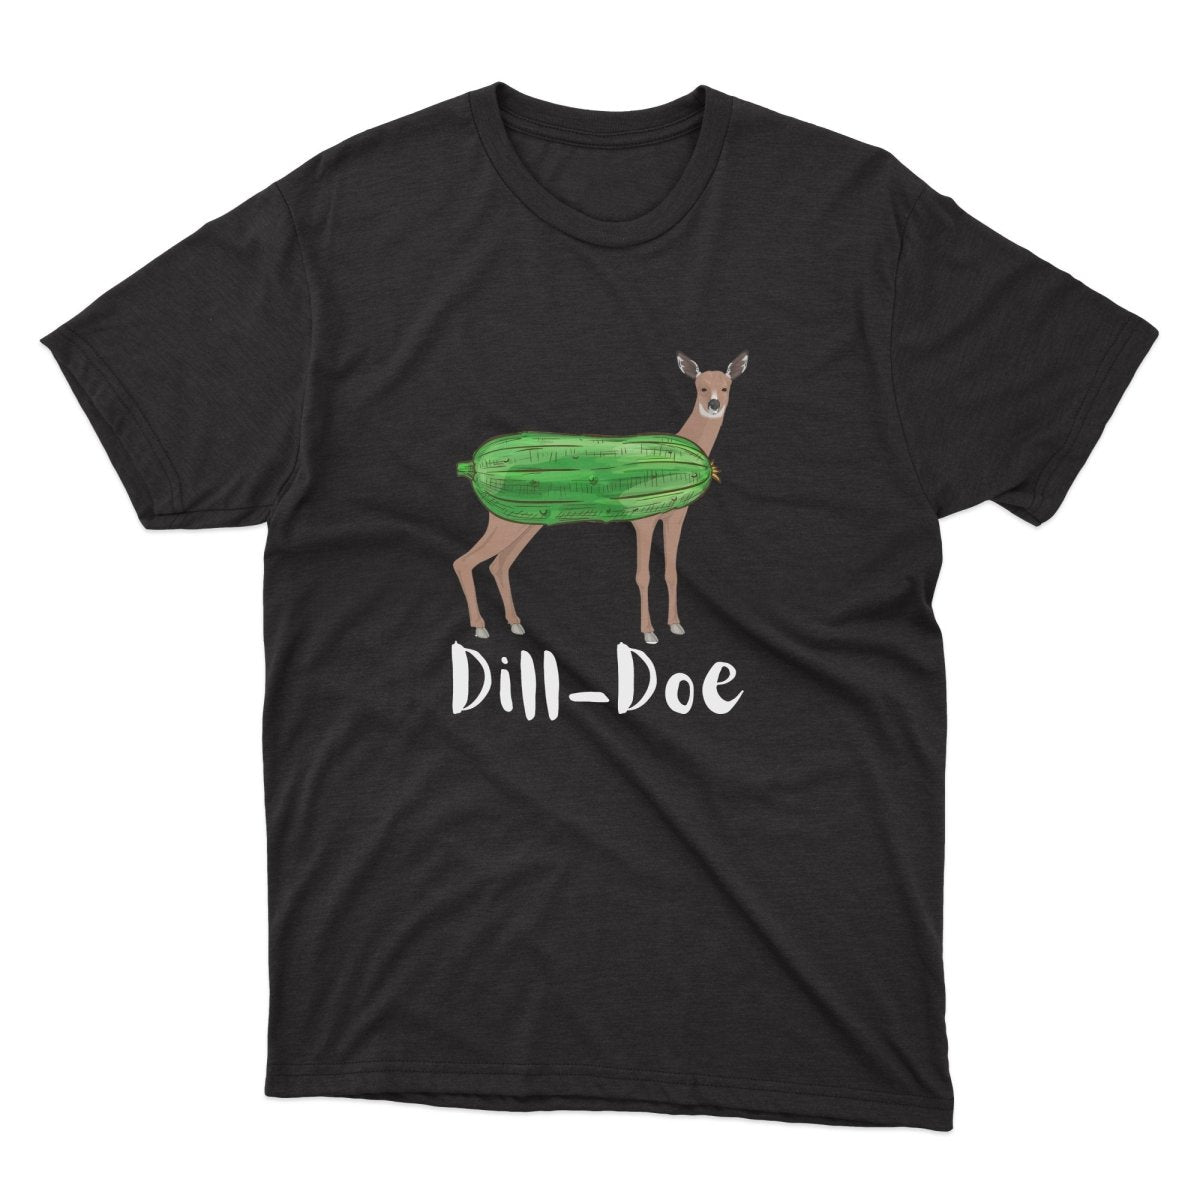 Dill Doe Shirt - stickerbullDill Doe ShirtShirtsPrintifystickerbull24234463565127901961BlackSa black t - shirt with an image of a deer wearing a green beanie